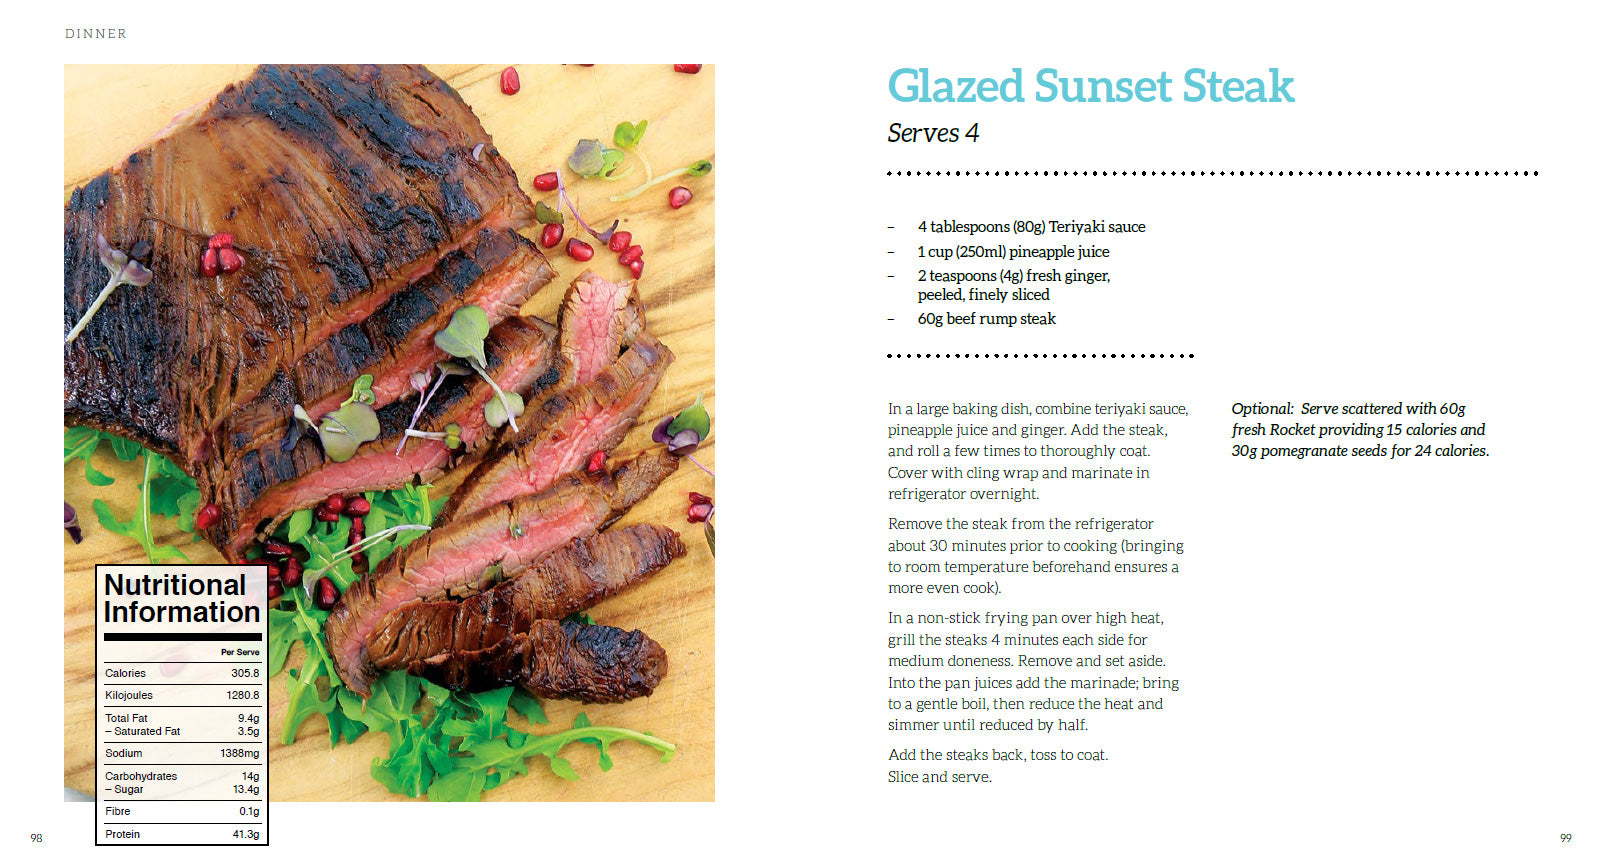 Glazed Sunset Steak